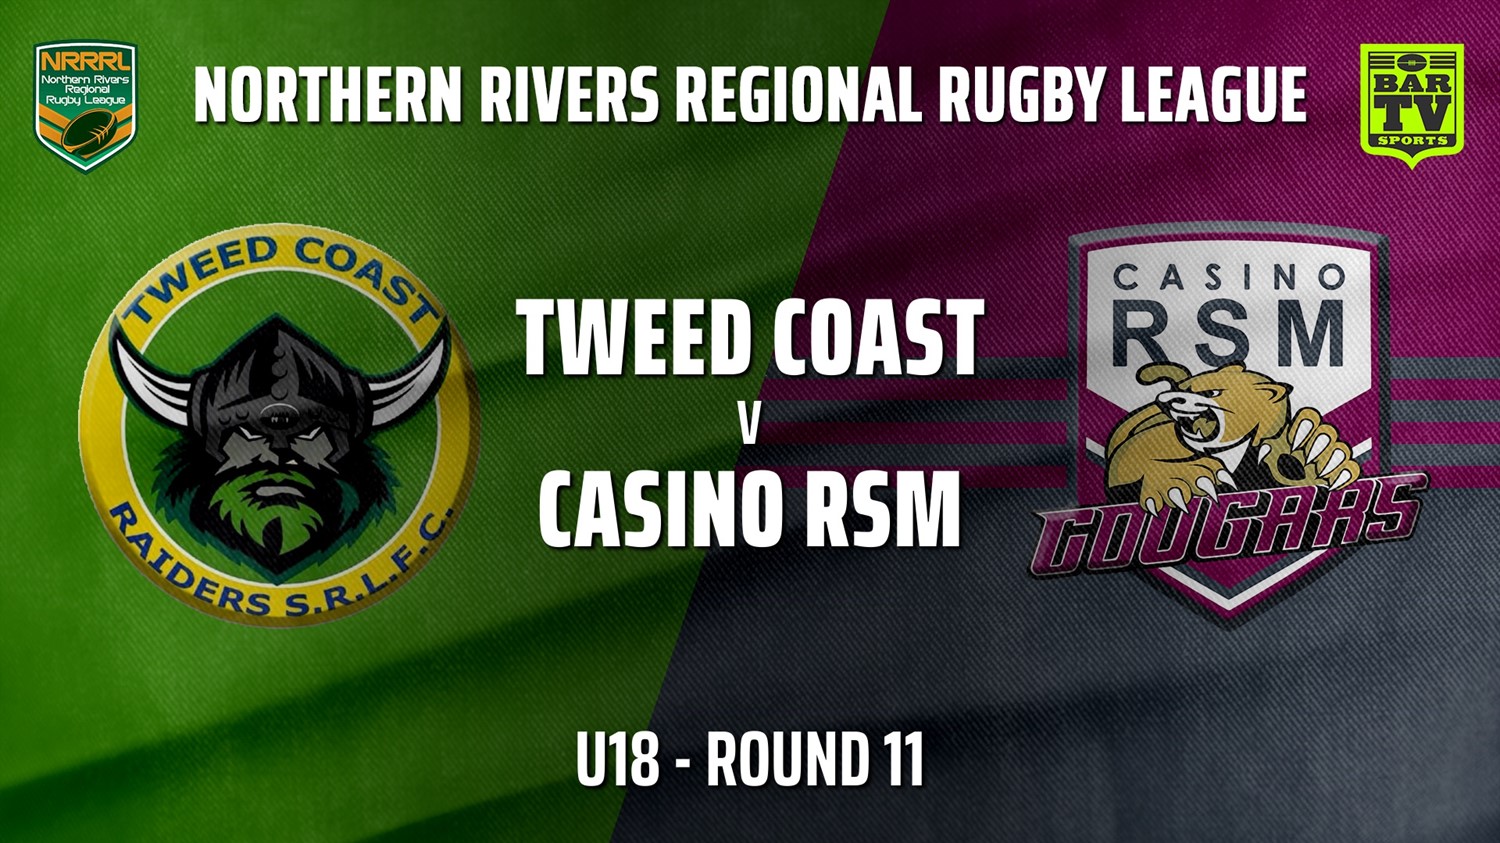 210718-Northern Rivers Round 11 - U18 - Tweed Coast Raiders v Casino RSM Cougars Slate Image